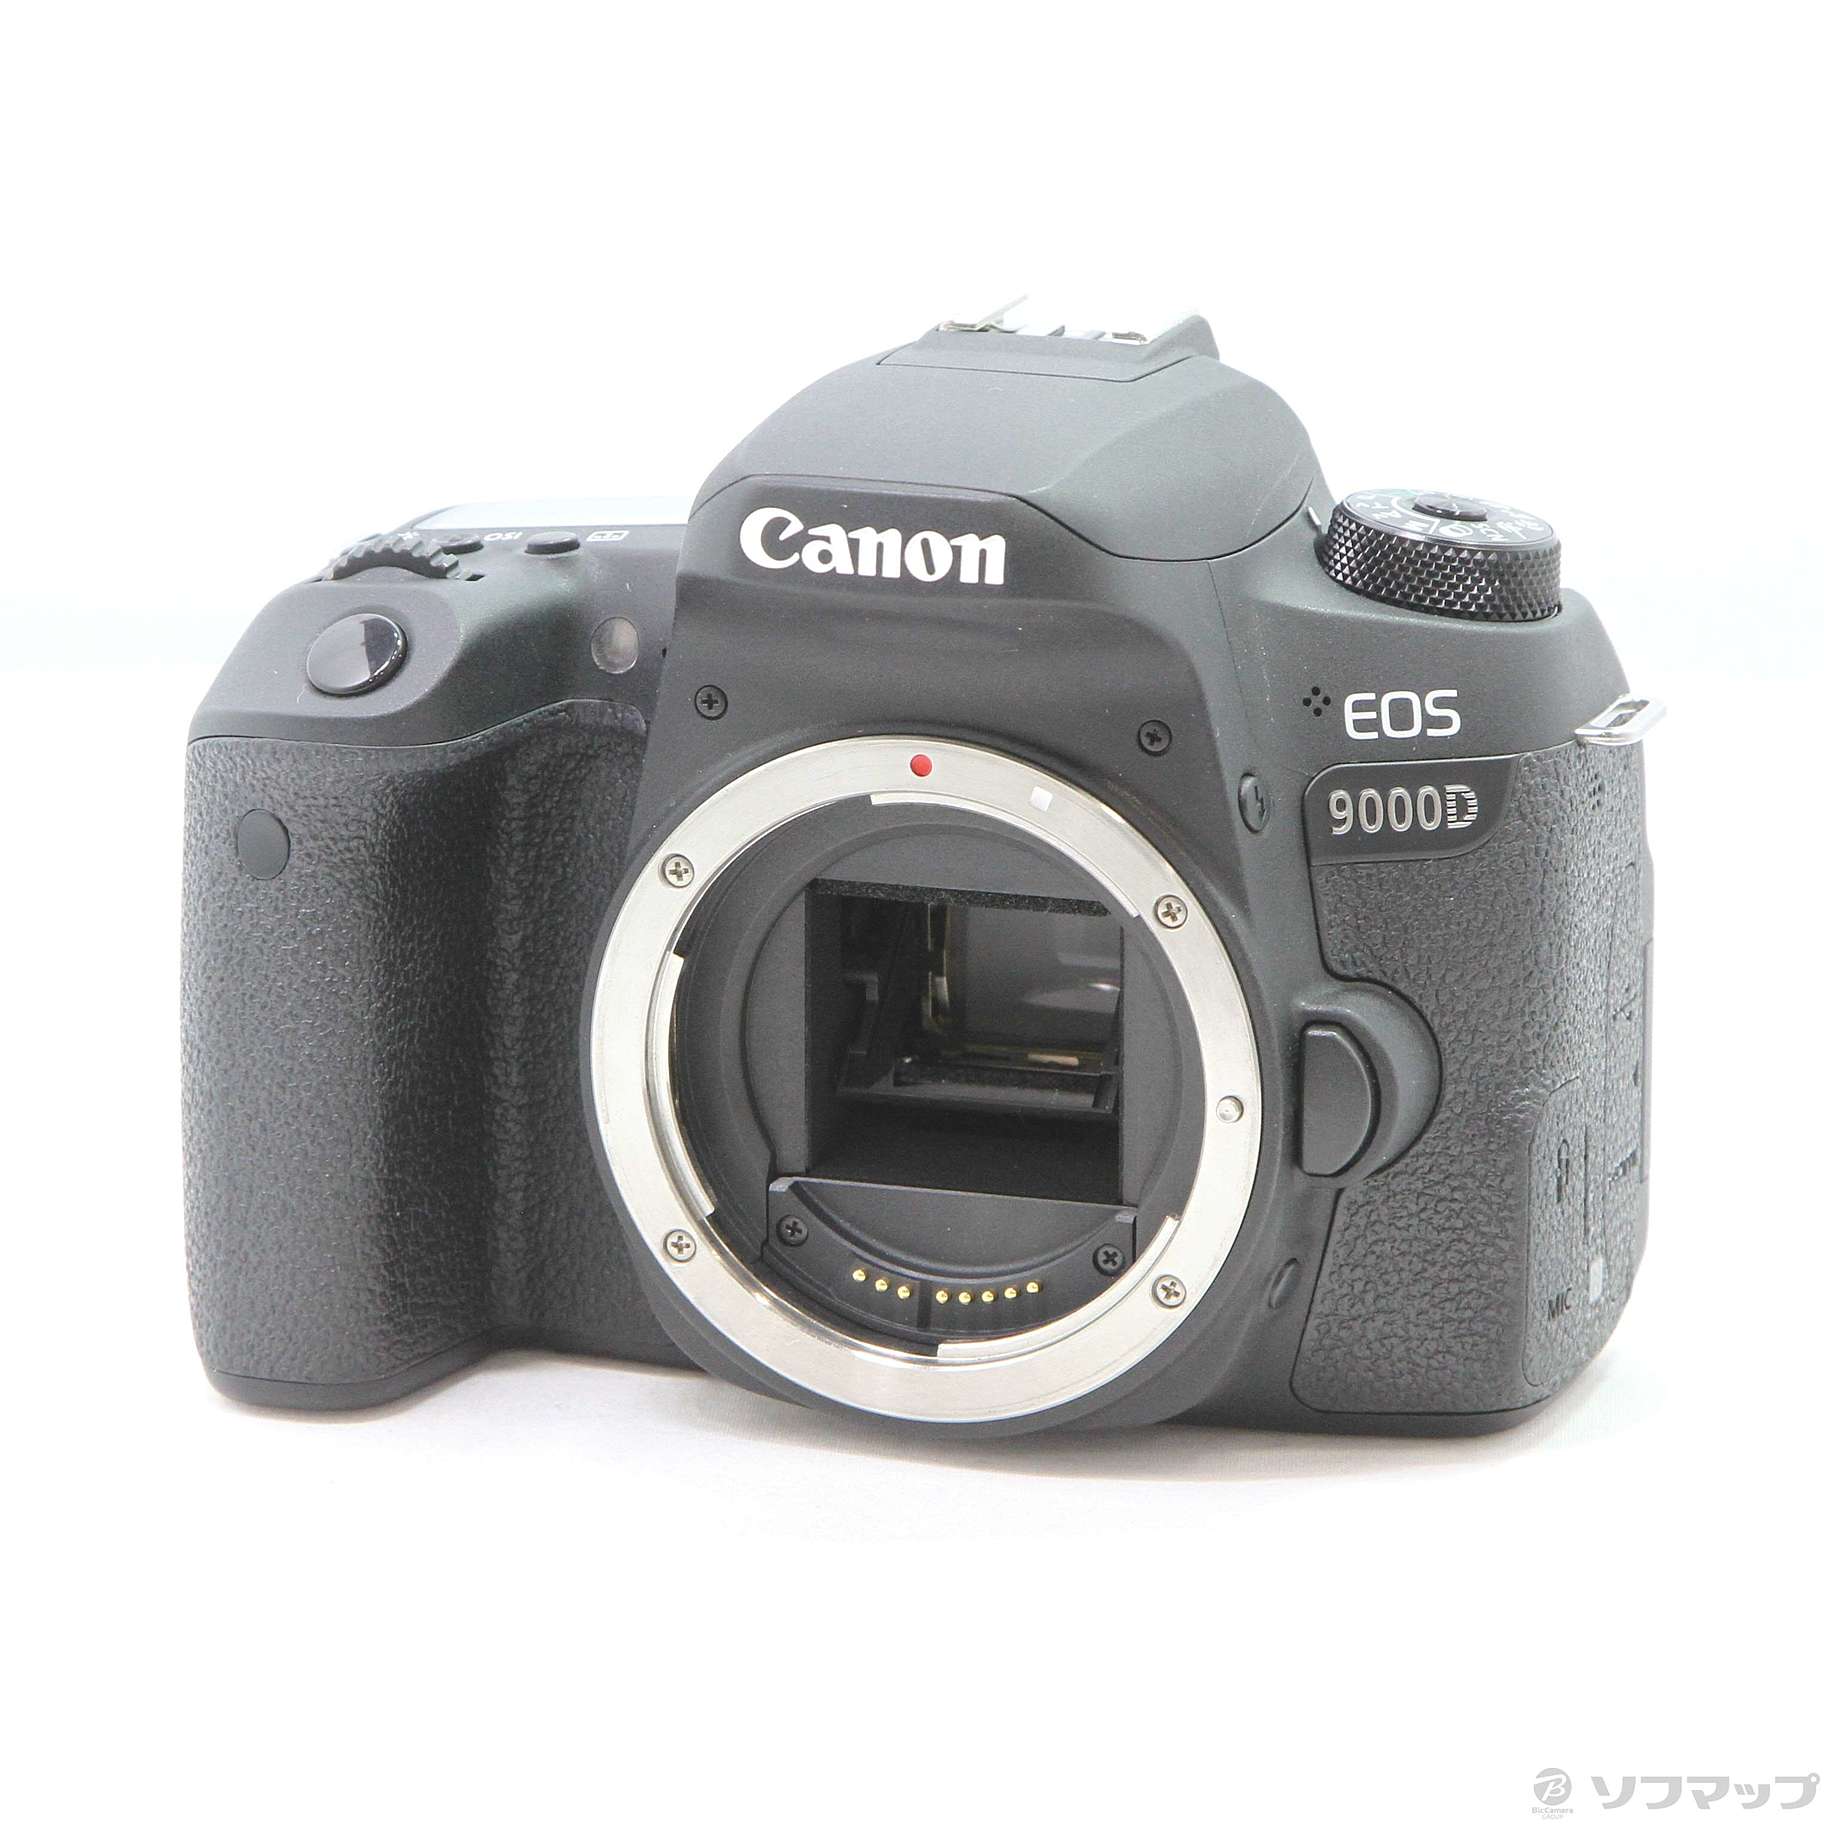 Canon ｷｬﾉﾝ ﾃﾞｼﾞﾀﾙ一眼 EOS 9000D ﾎﾞﾃﾞｨとﾚﾝｽﾞ